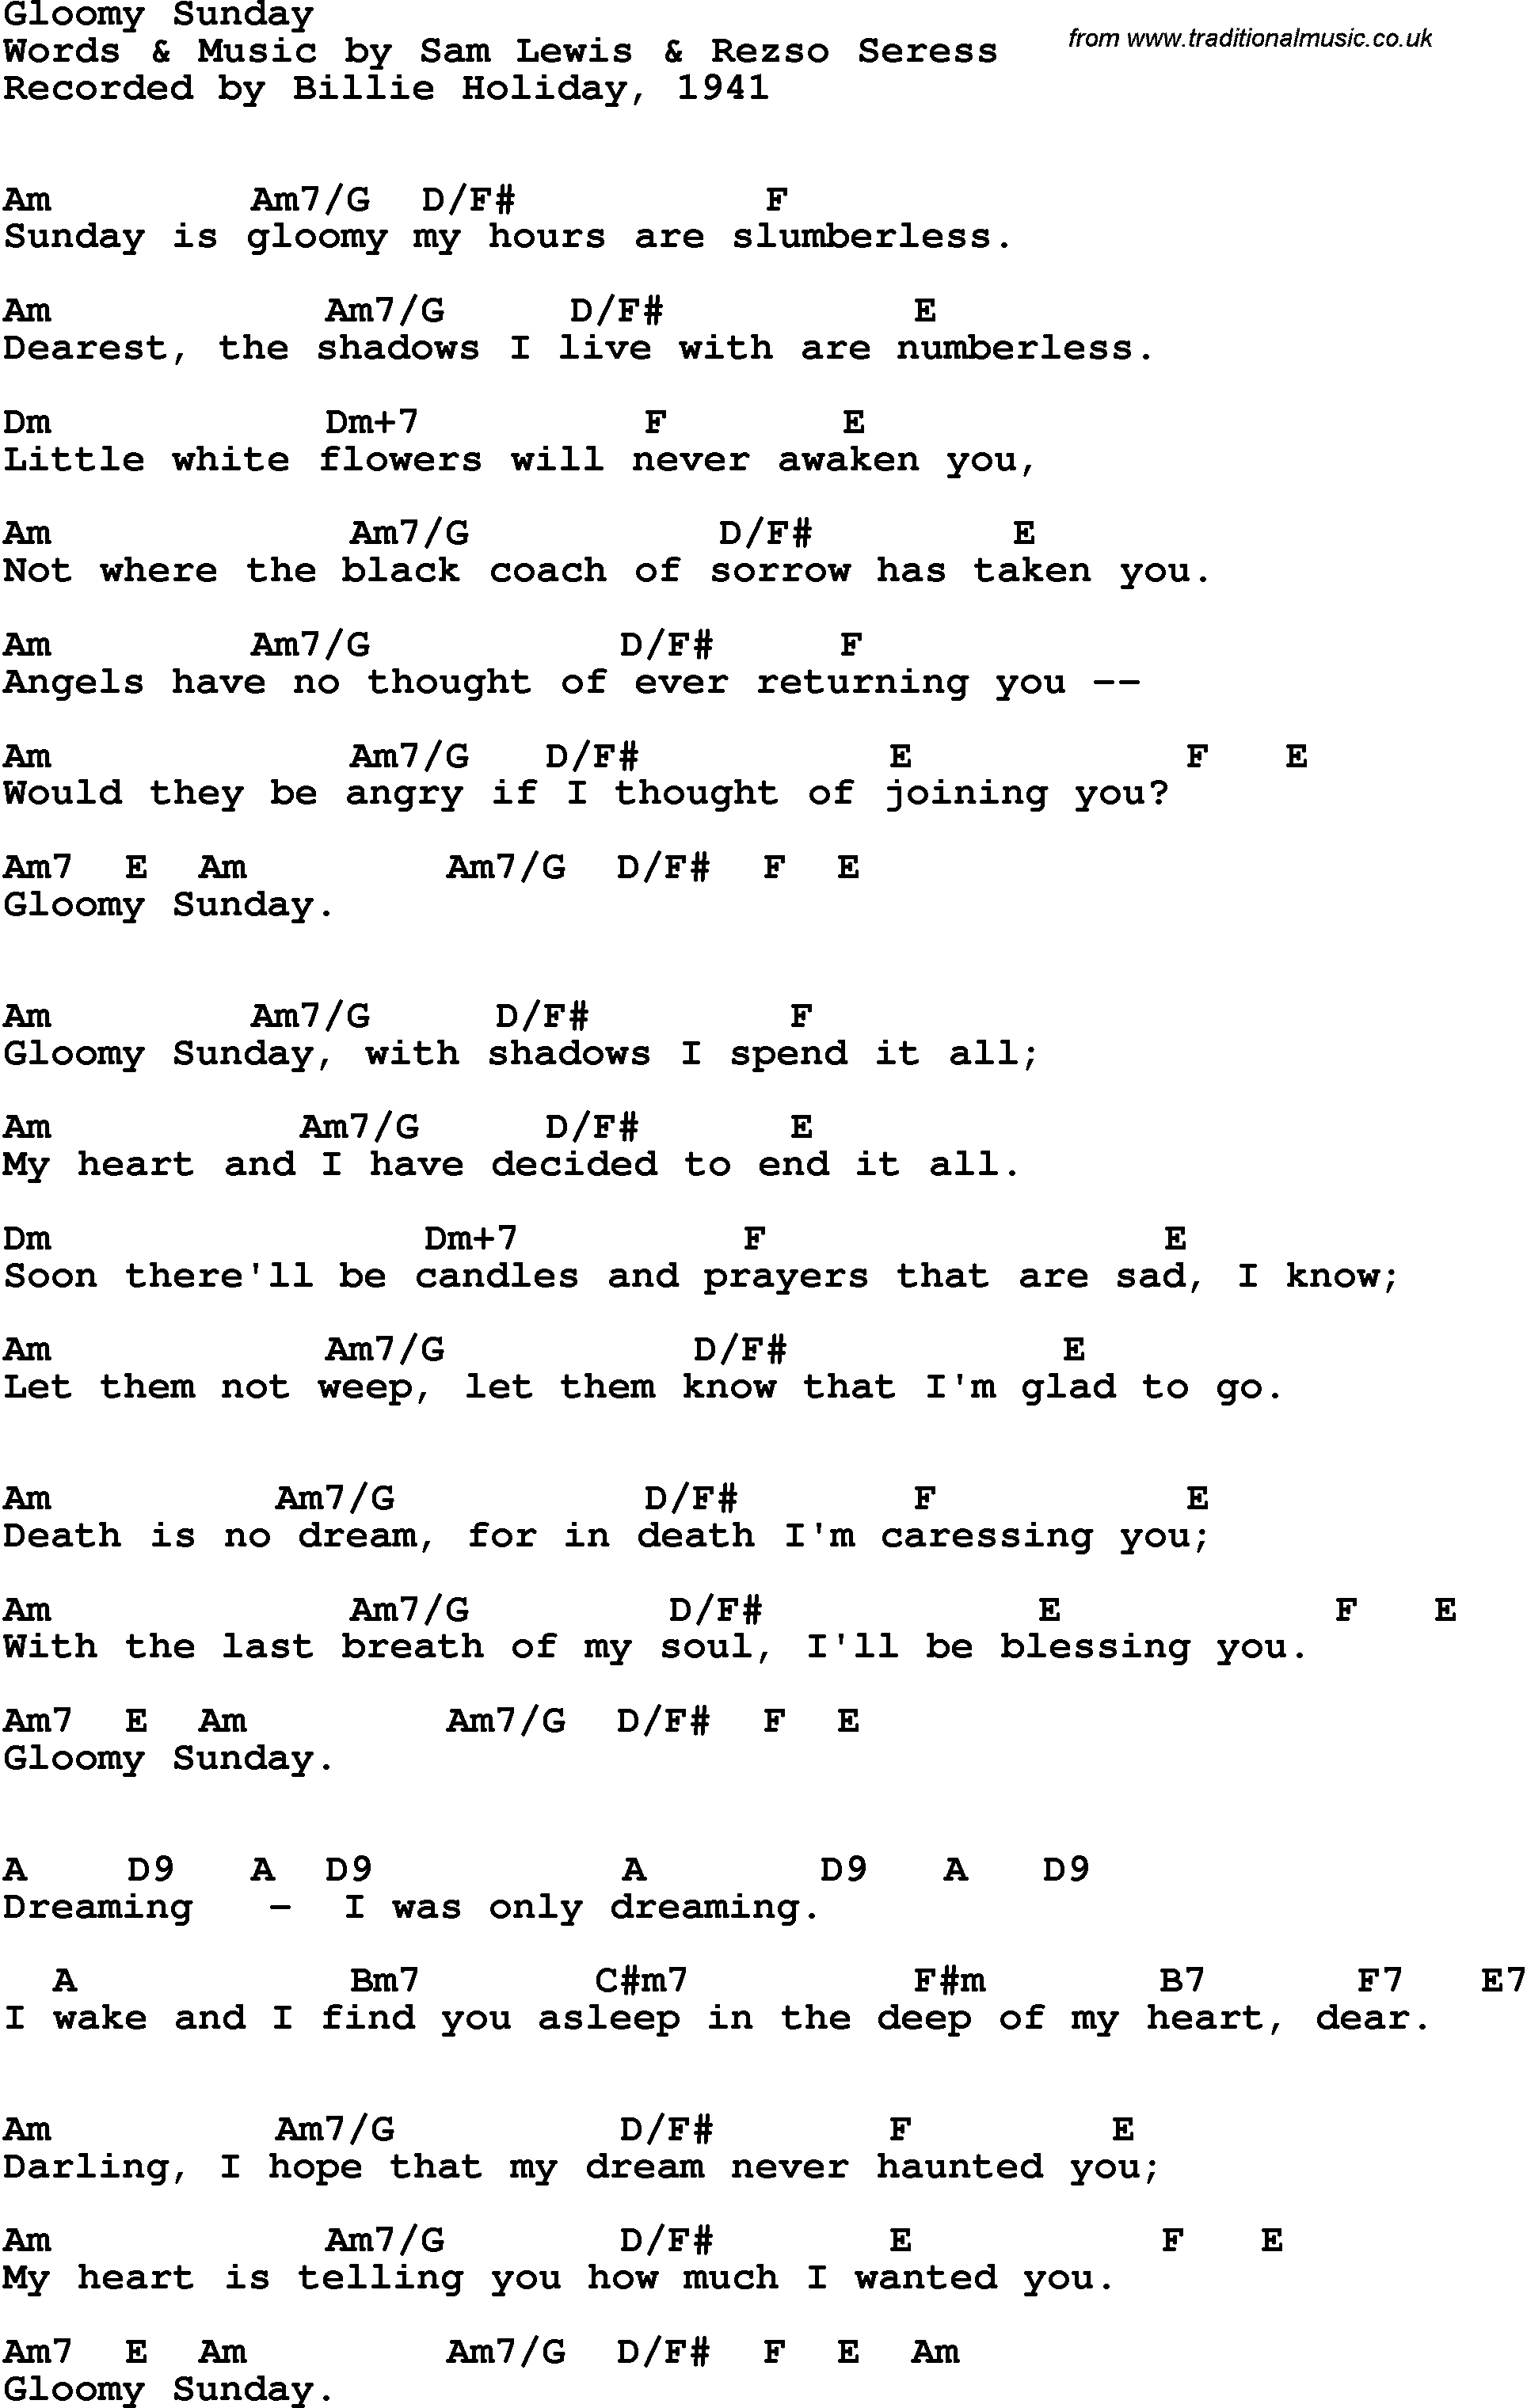 Song Lyrics with guitar chords for Gloomy Sunday - Billie Holiday, 1941